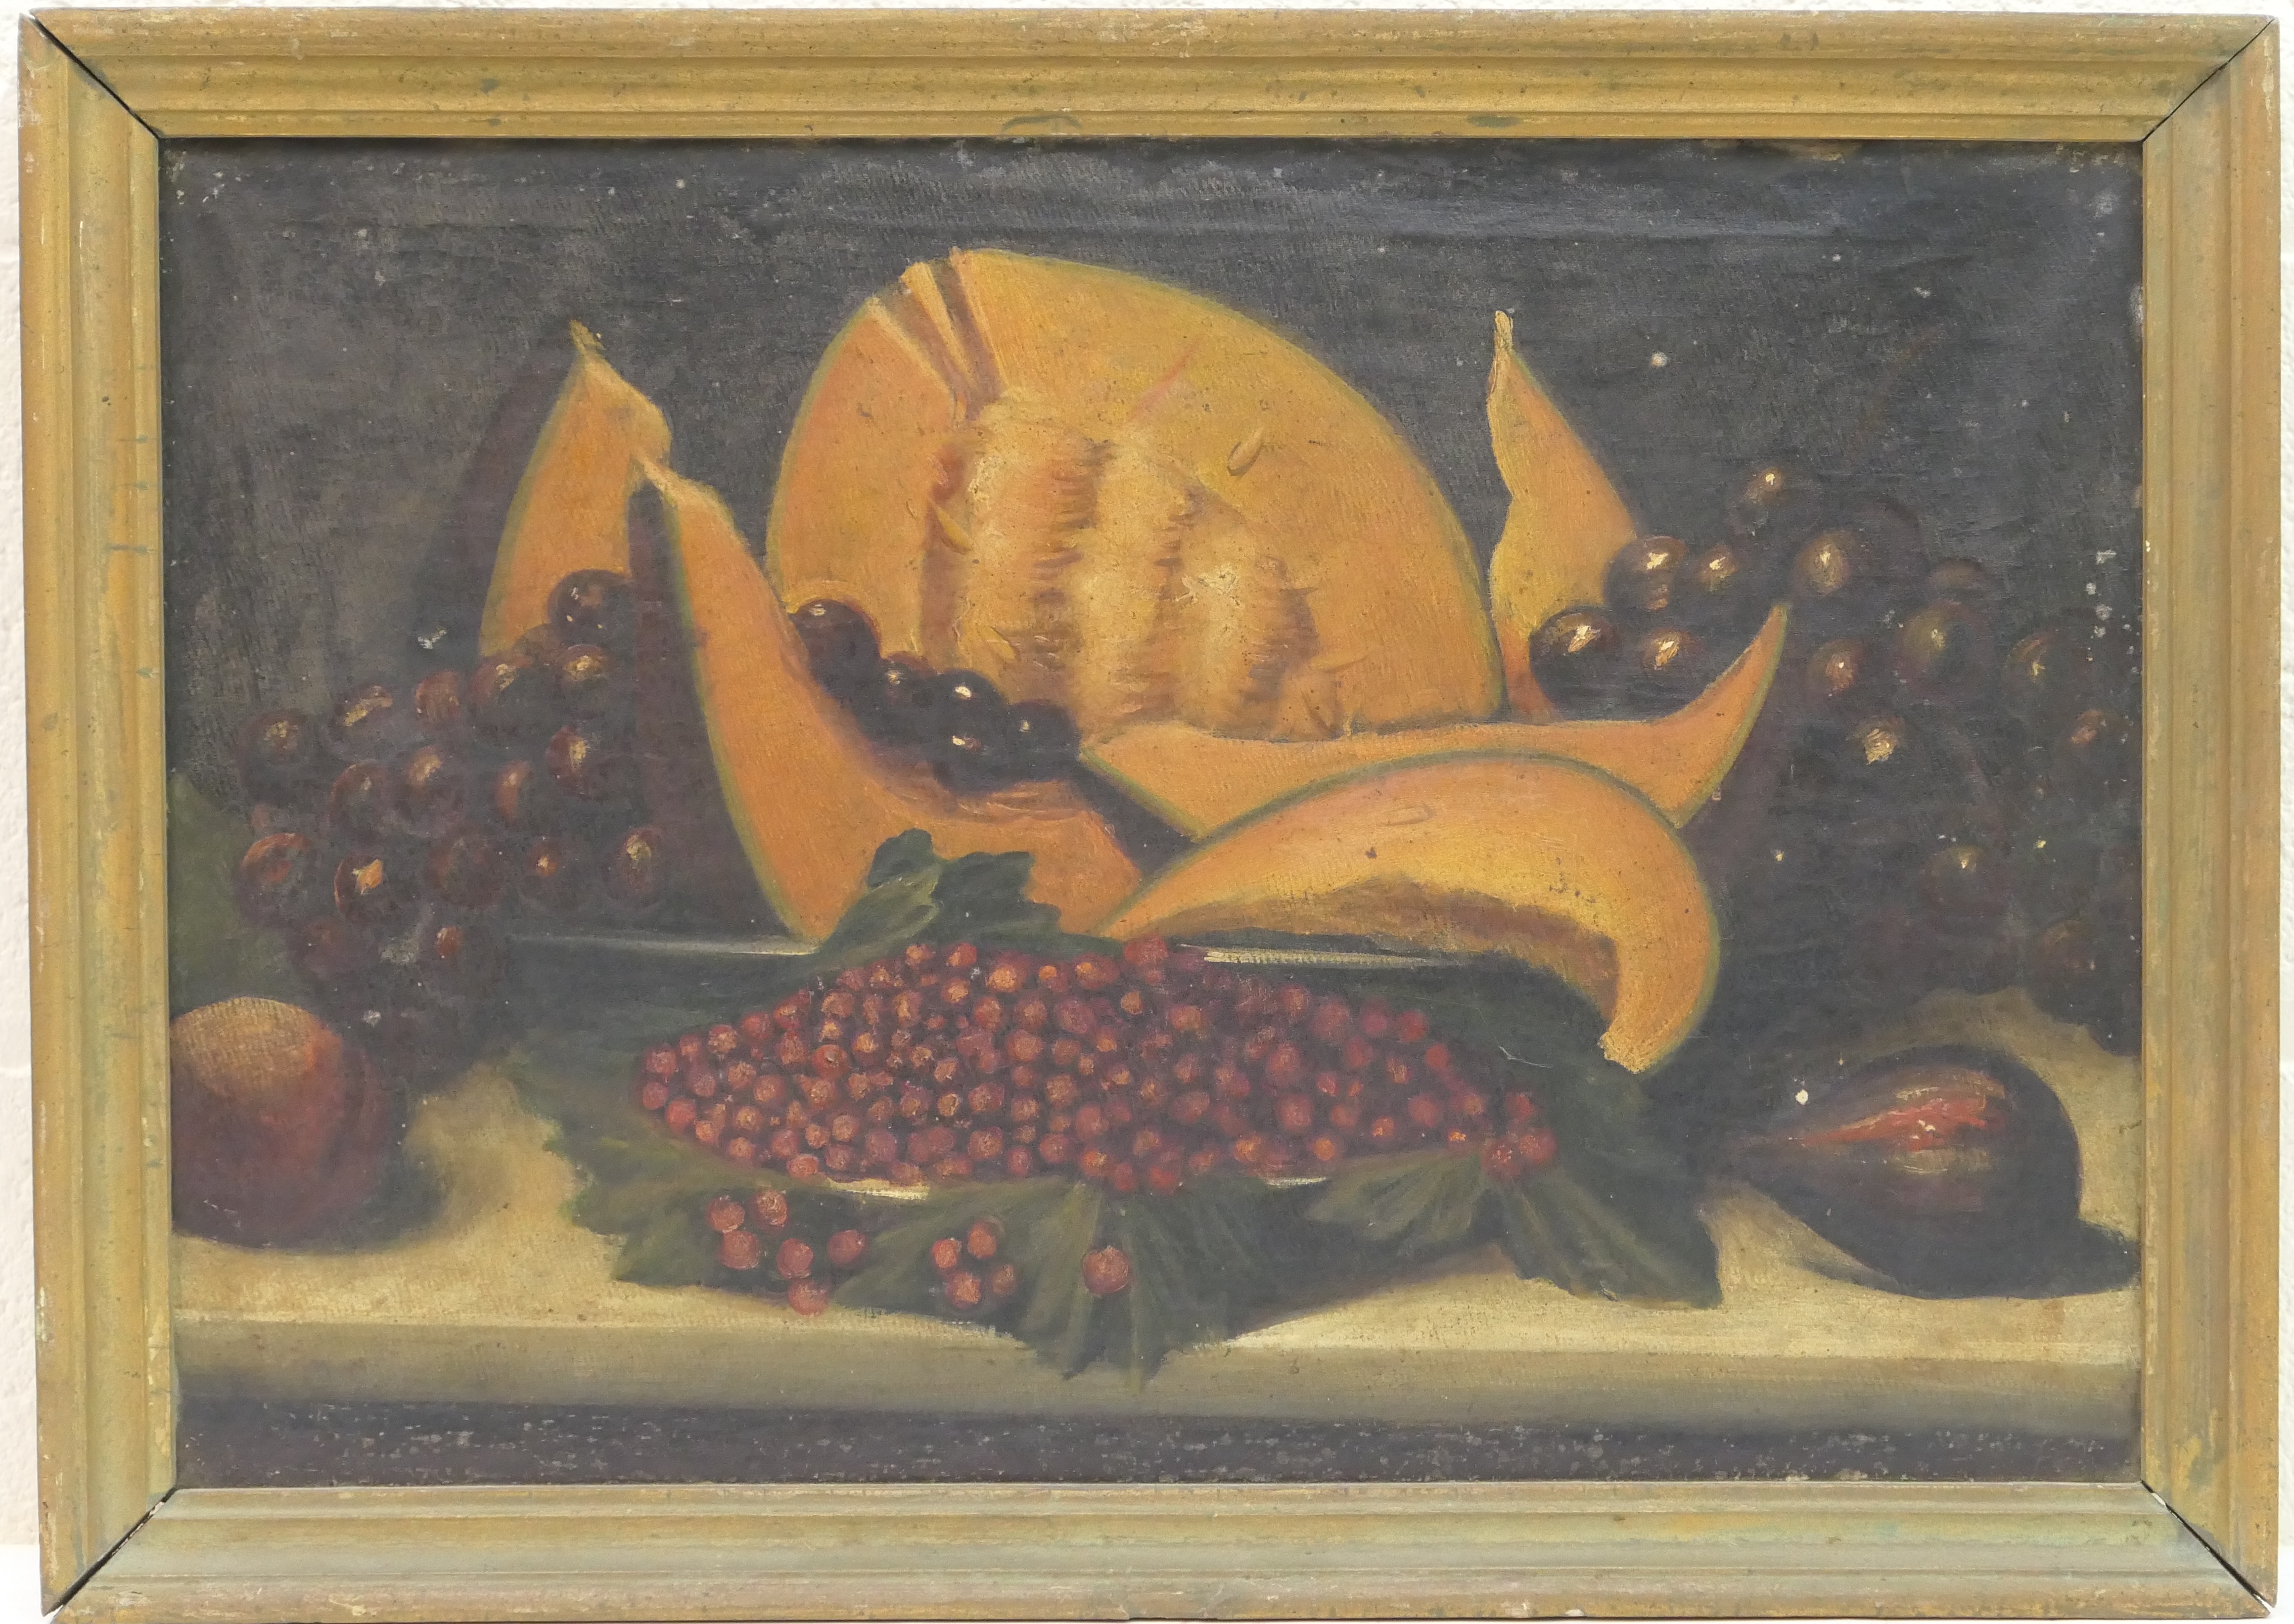 Maltese School (19th Century), Set of four still life studies, fruits on a ledge, oils on canvas,